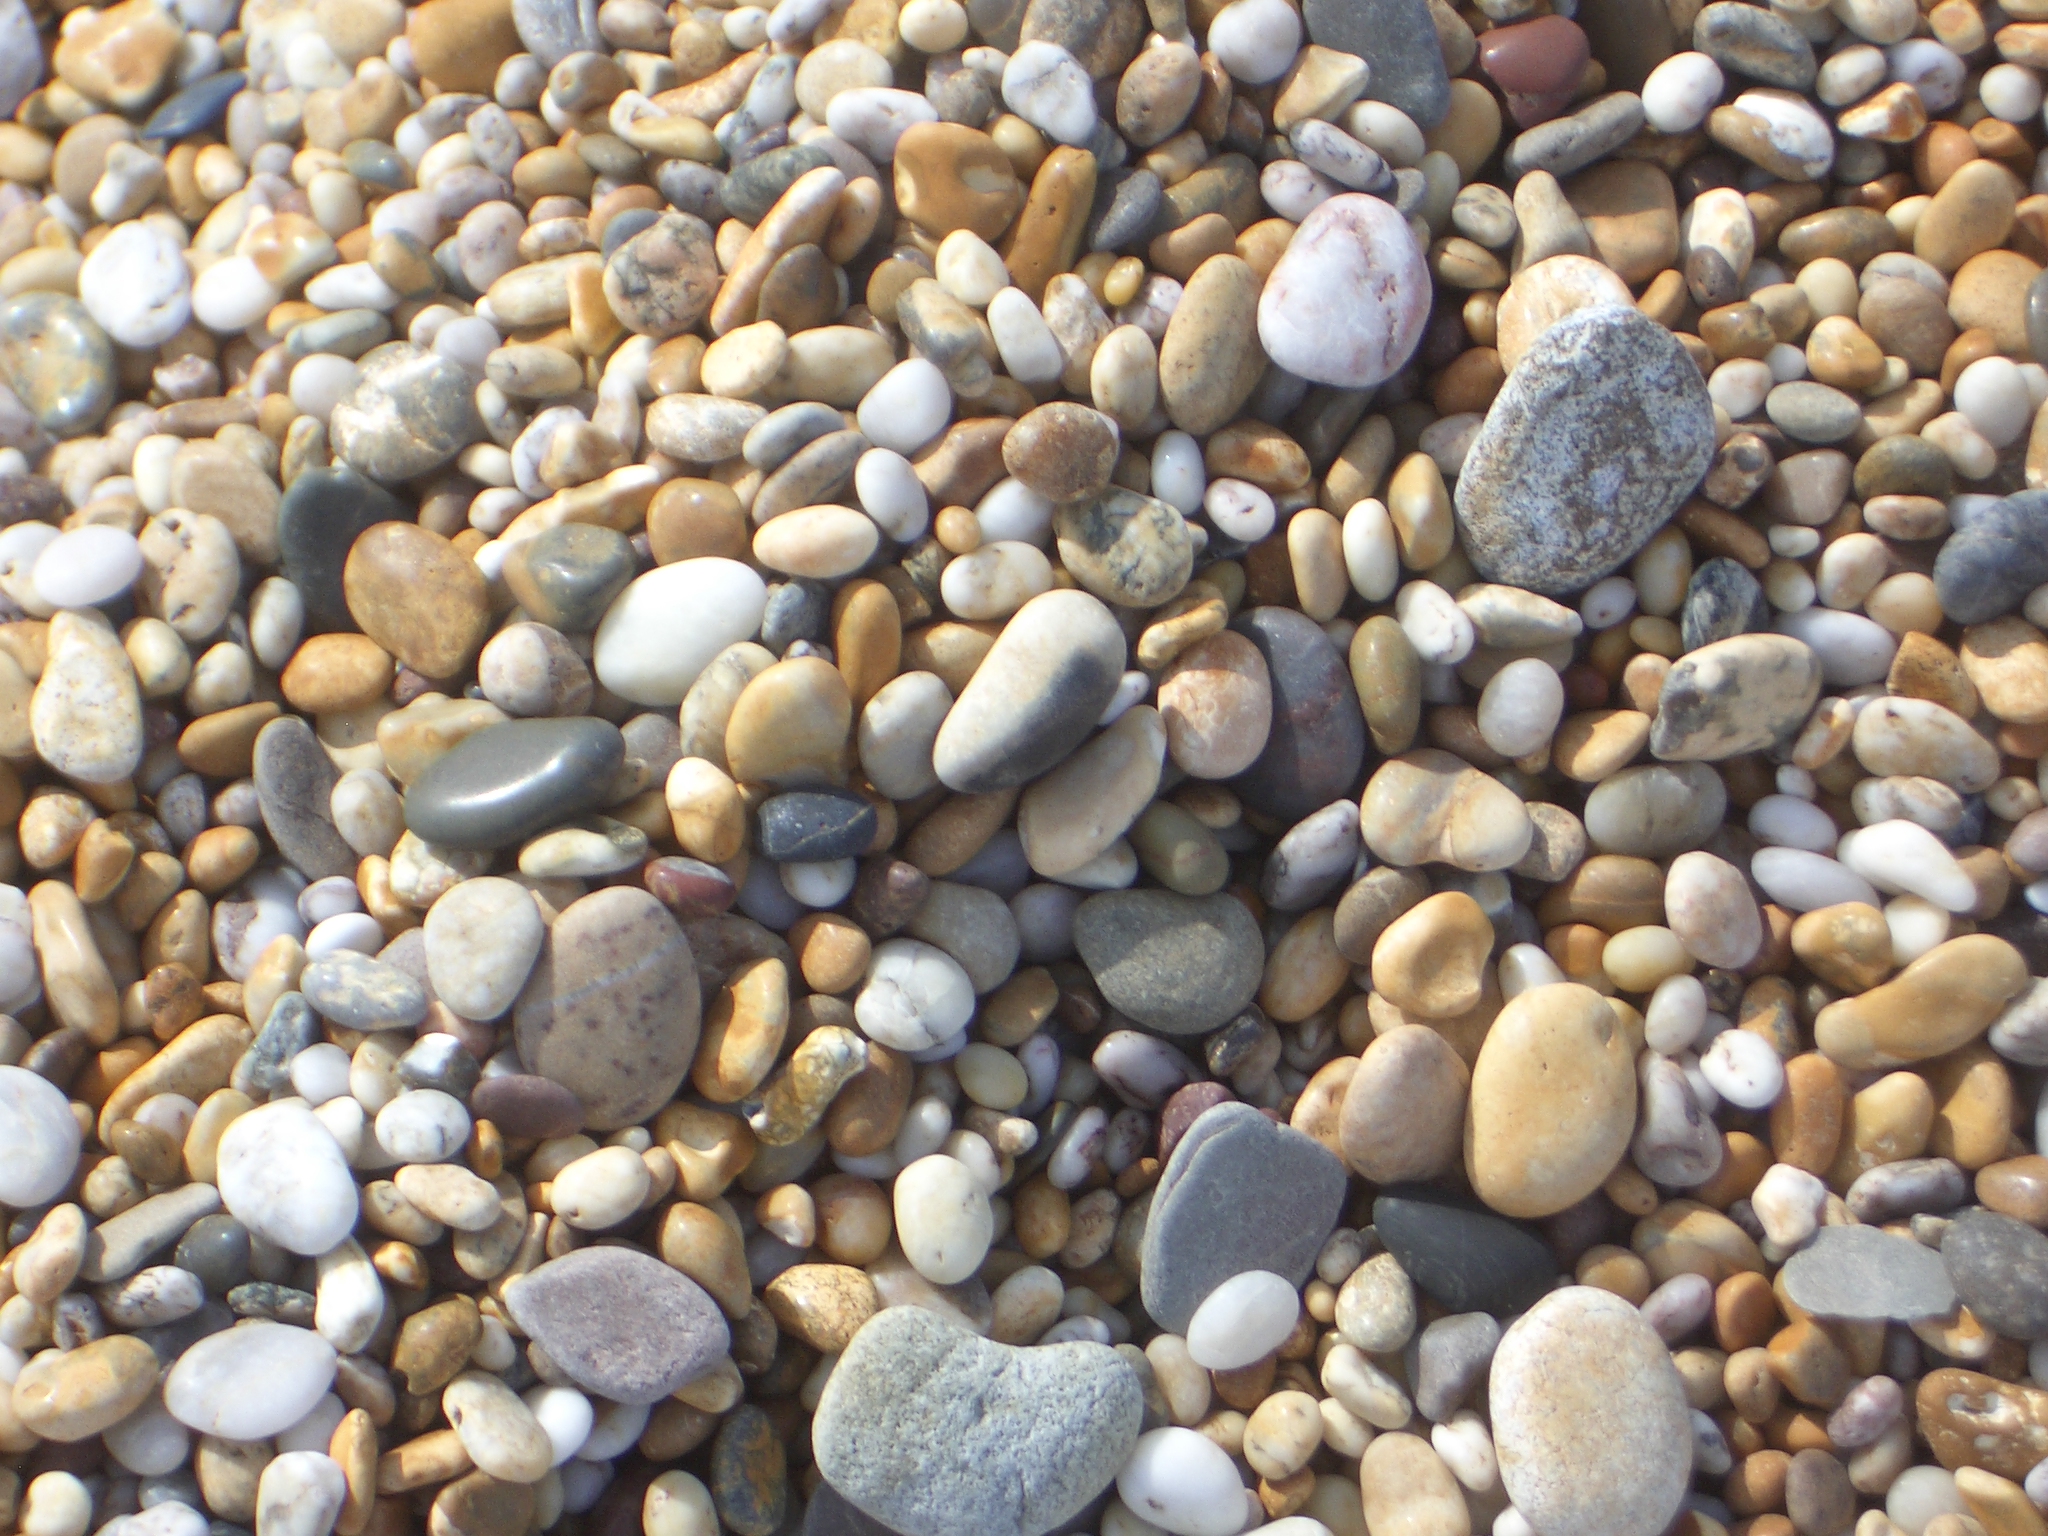 File:Slapton sands pebbles.JPG - Wikipedia